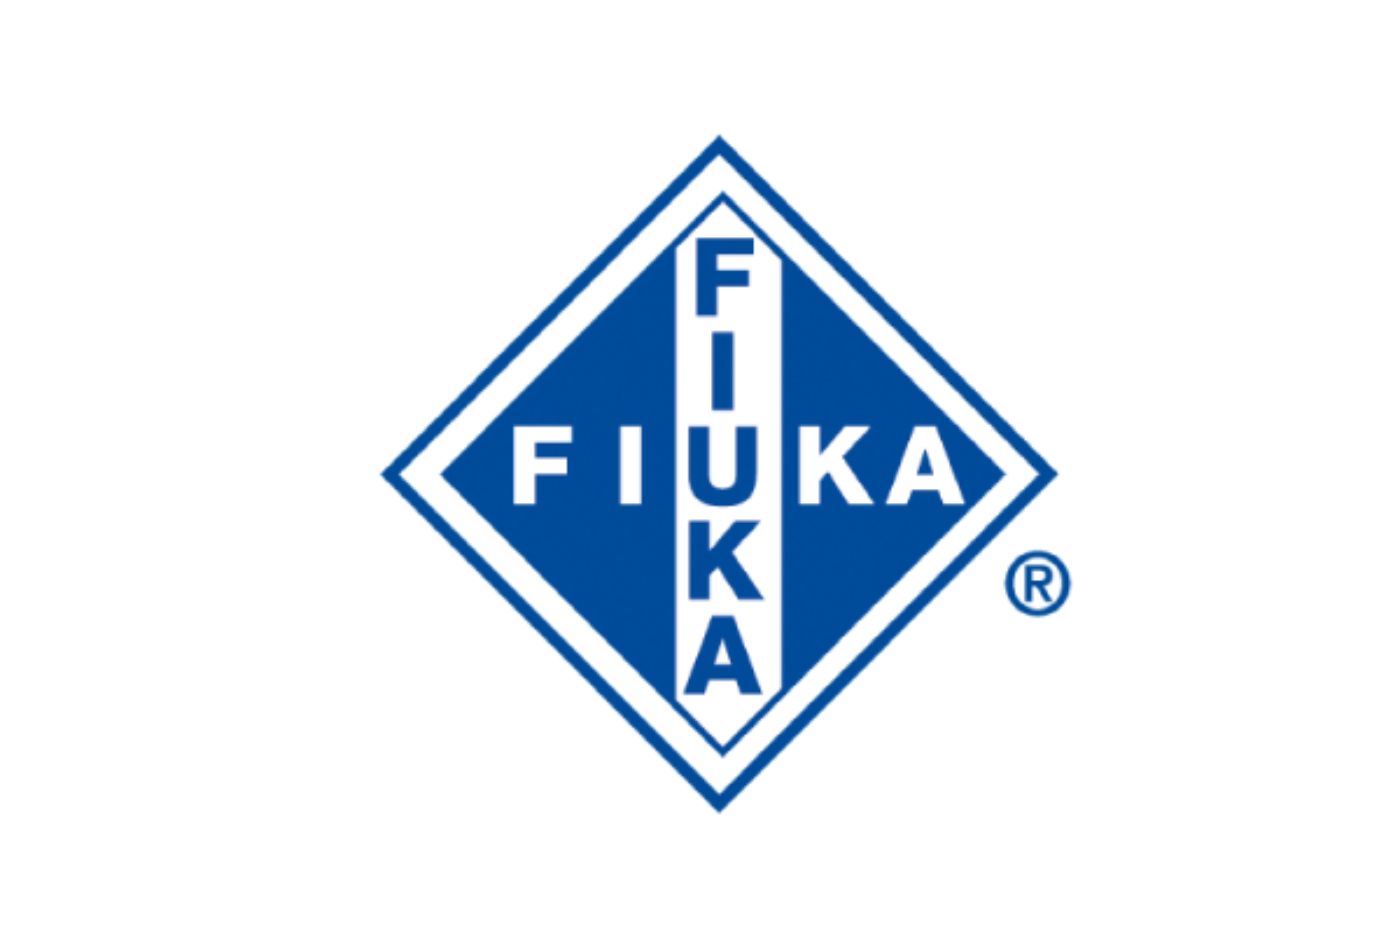 FIUKA Firmenlogo 600x400